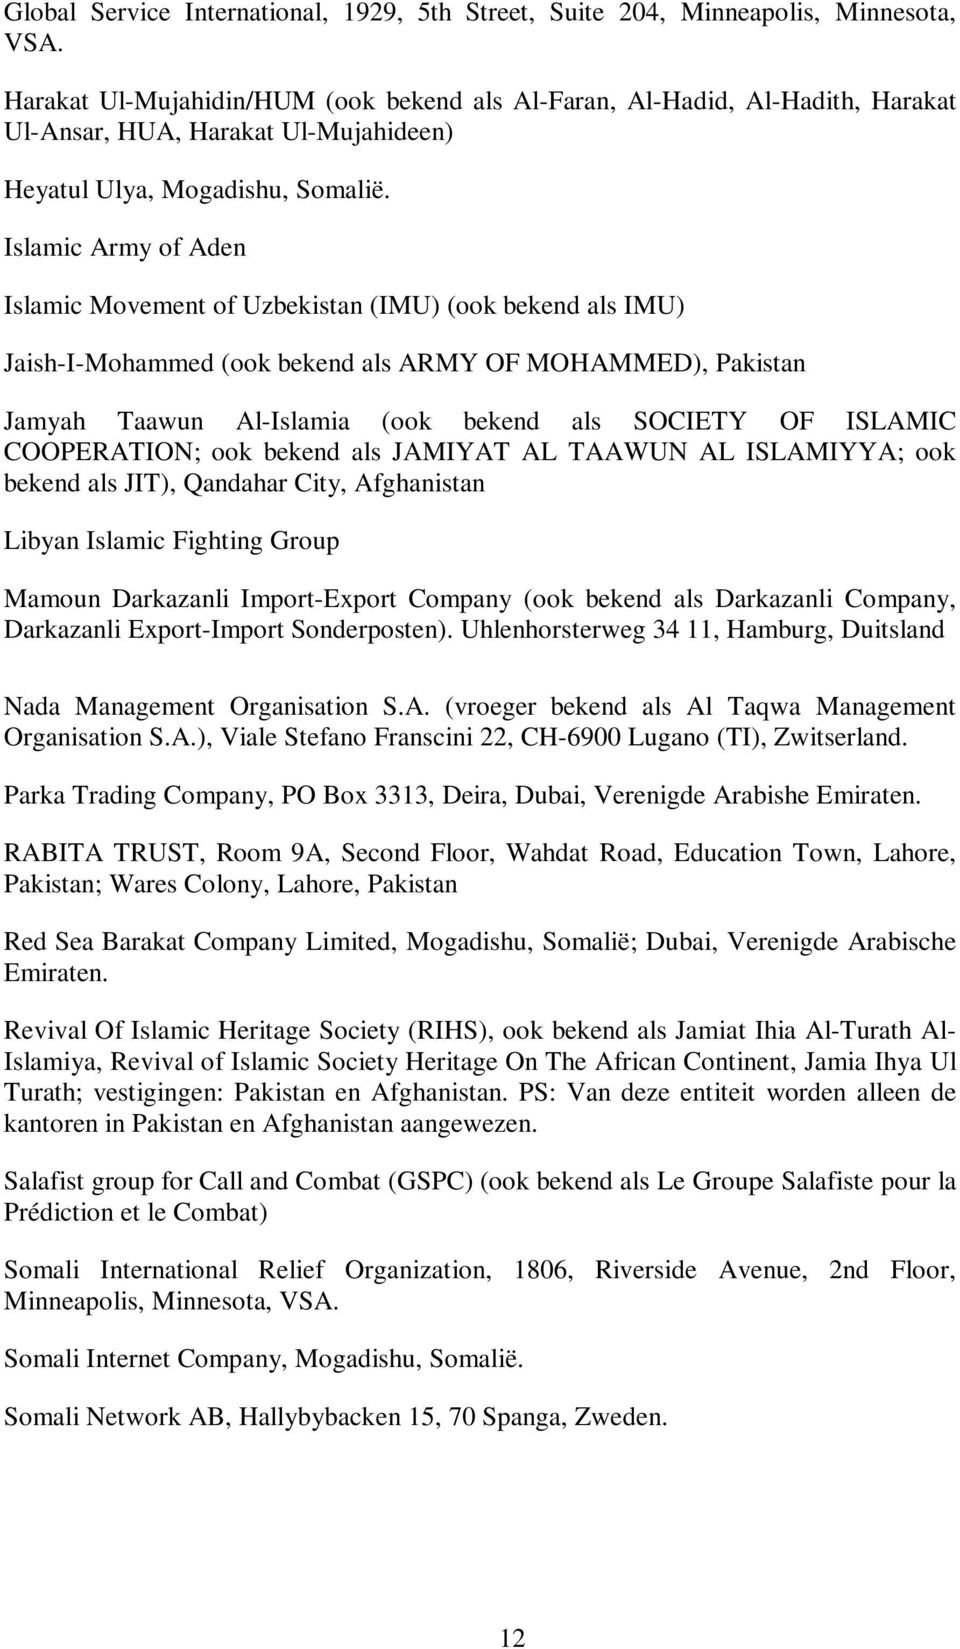 Islamic Army of Aden Islamic Movement of Uzbekistan (IMU) (ook bekend als IMU) Jaish-I-Mohammed (ook bekend als ARMY OF MOHAMMED), Pakistan Jamyah Taawun Al-Islamia (ook bekend als SOCIETY OF ISLAMIC